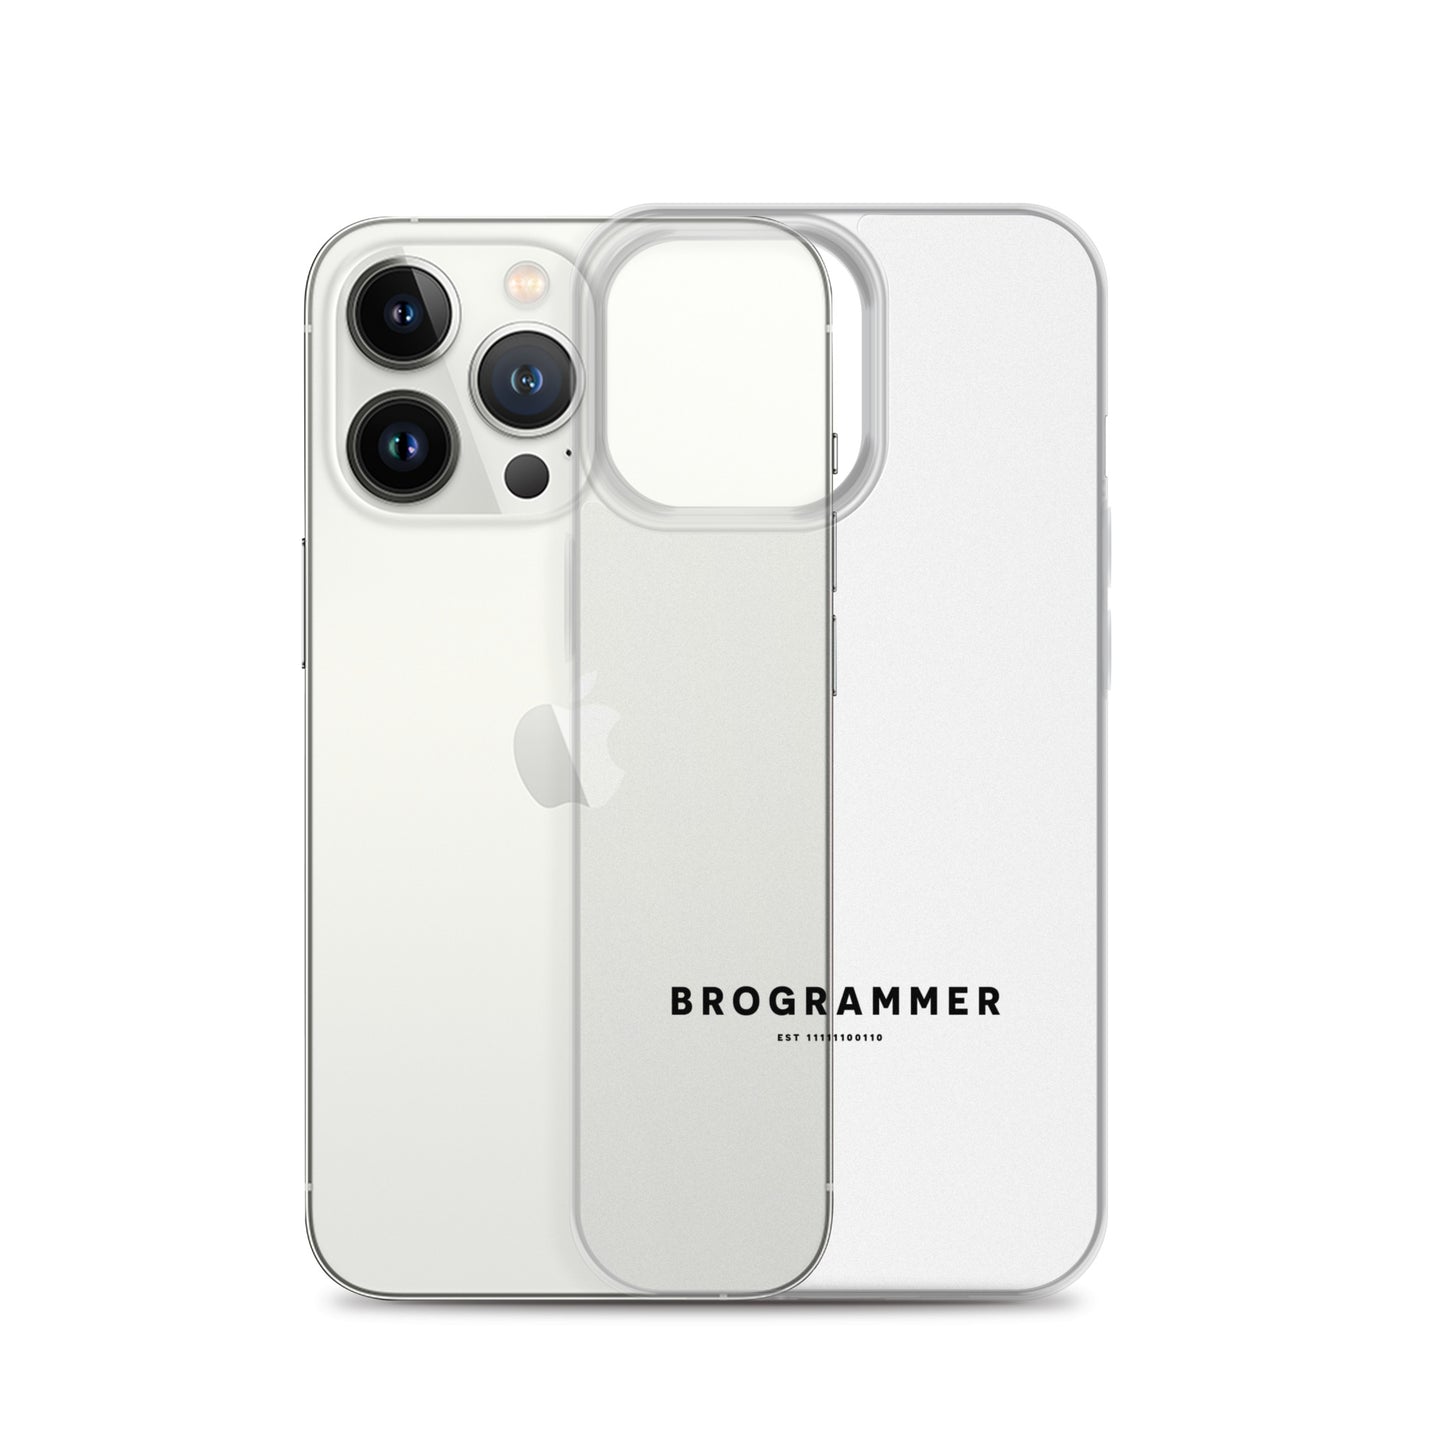 Brogrammer iPhone Case black Text.